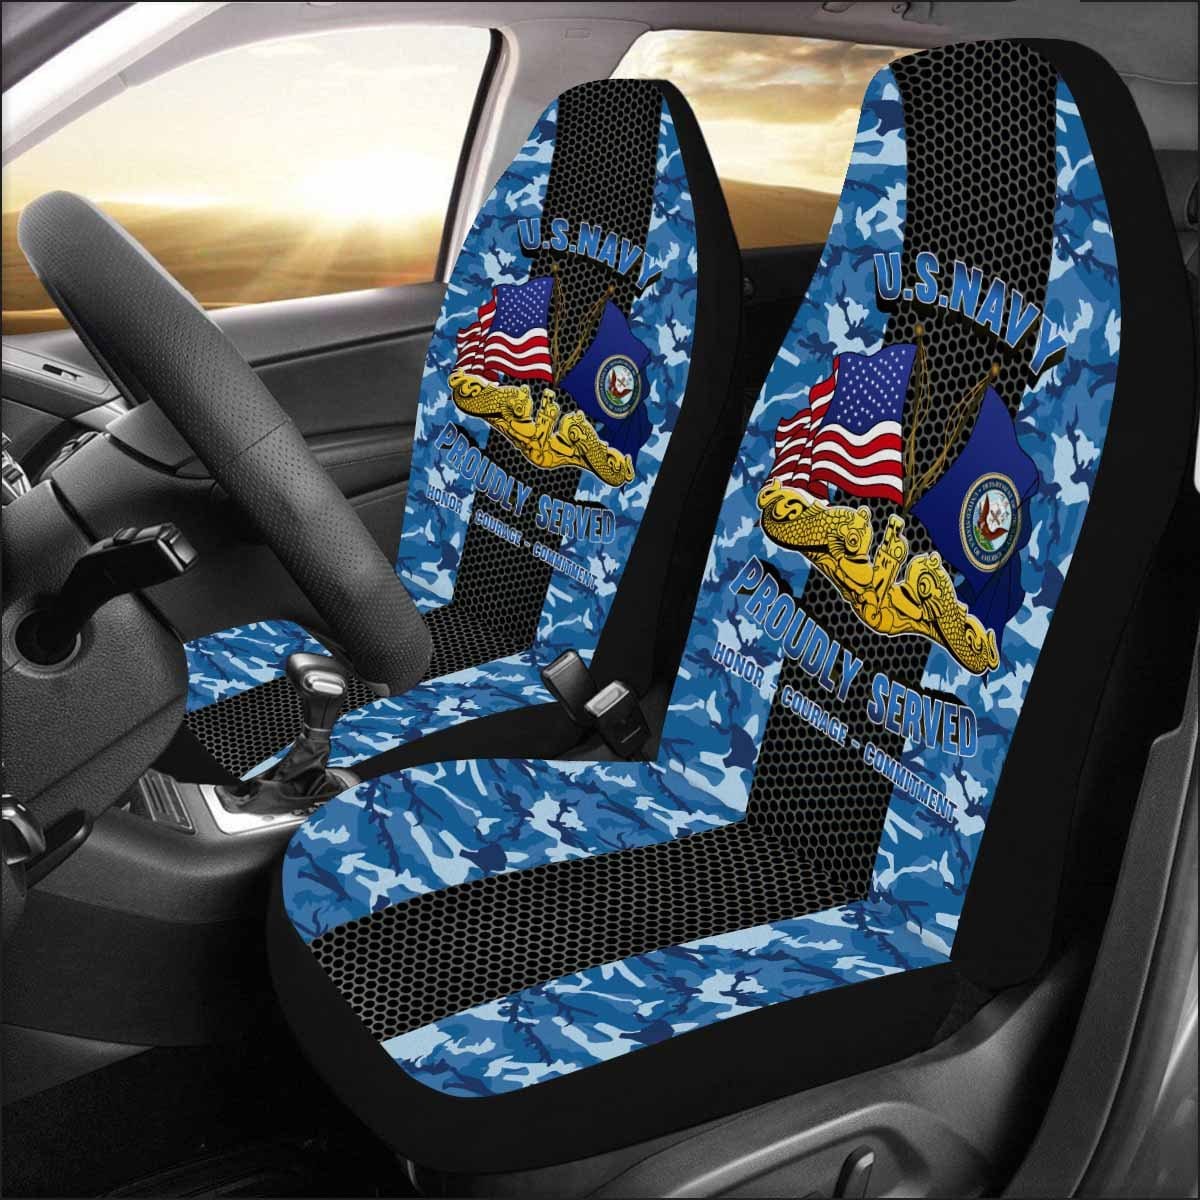 U.S NAVY SUBMARINE WARFARE Car Seat Covers (Set of 2)-SeatCovers-Navy-Badge-Veterans Nation